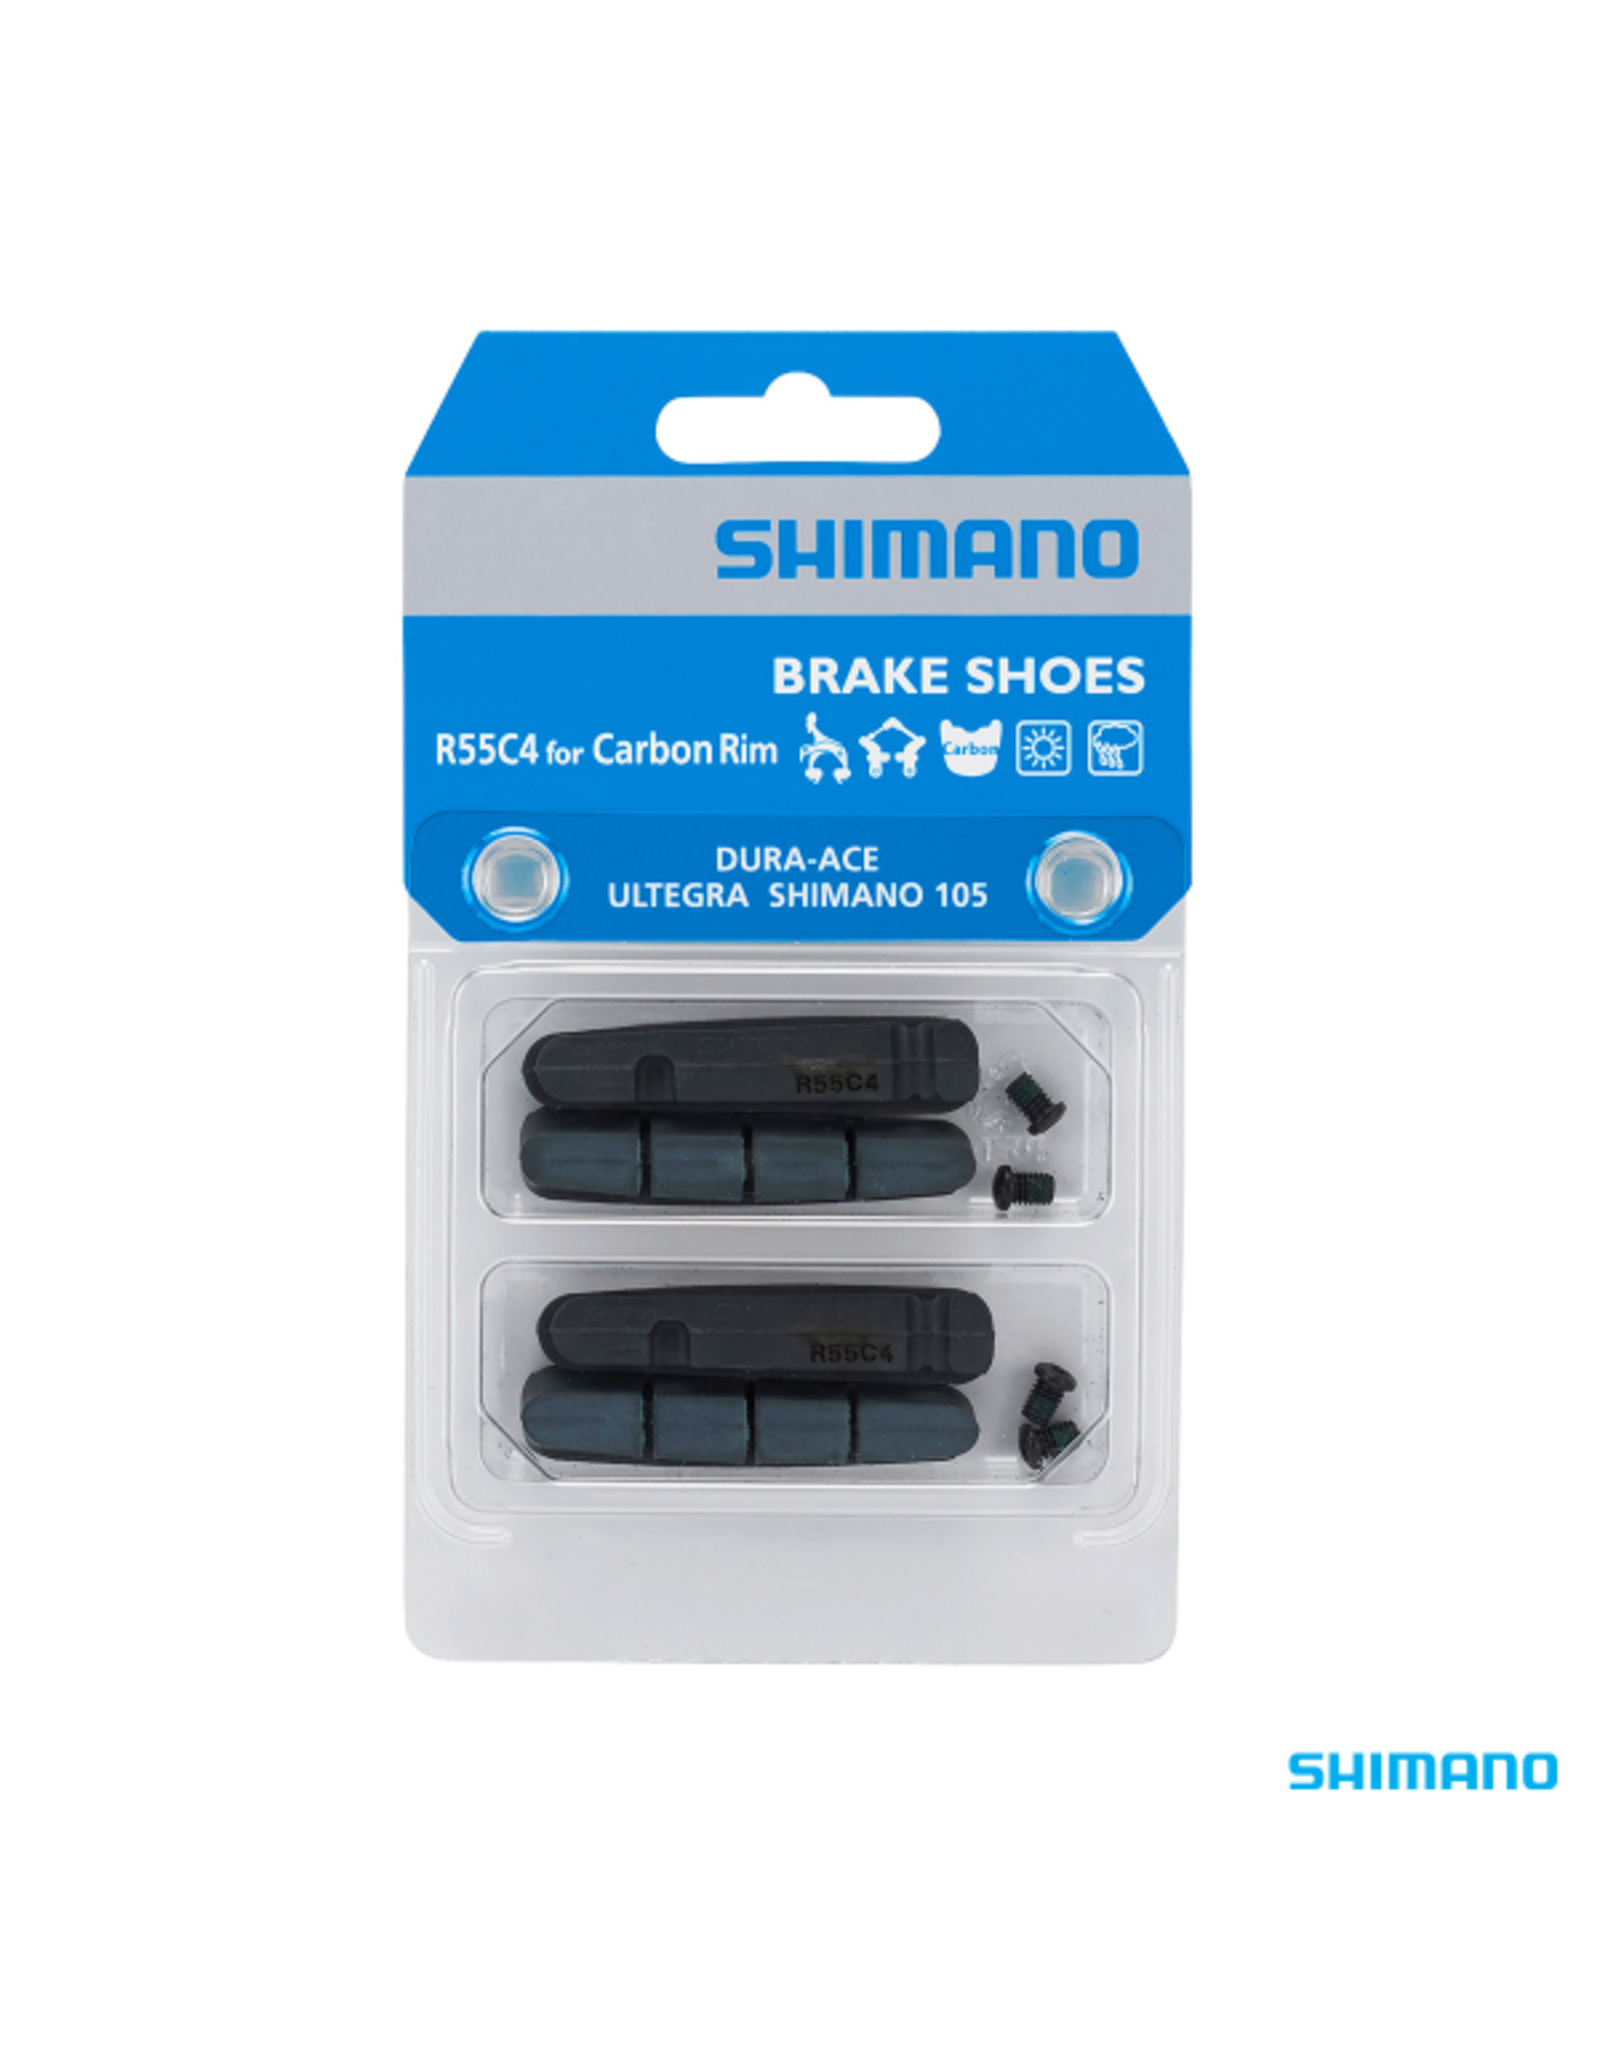 Shimano SHIMANO BR-9000 R55C4 2 PAIR INSERTS CARBON RIM BRAKE PADS